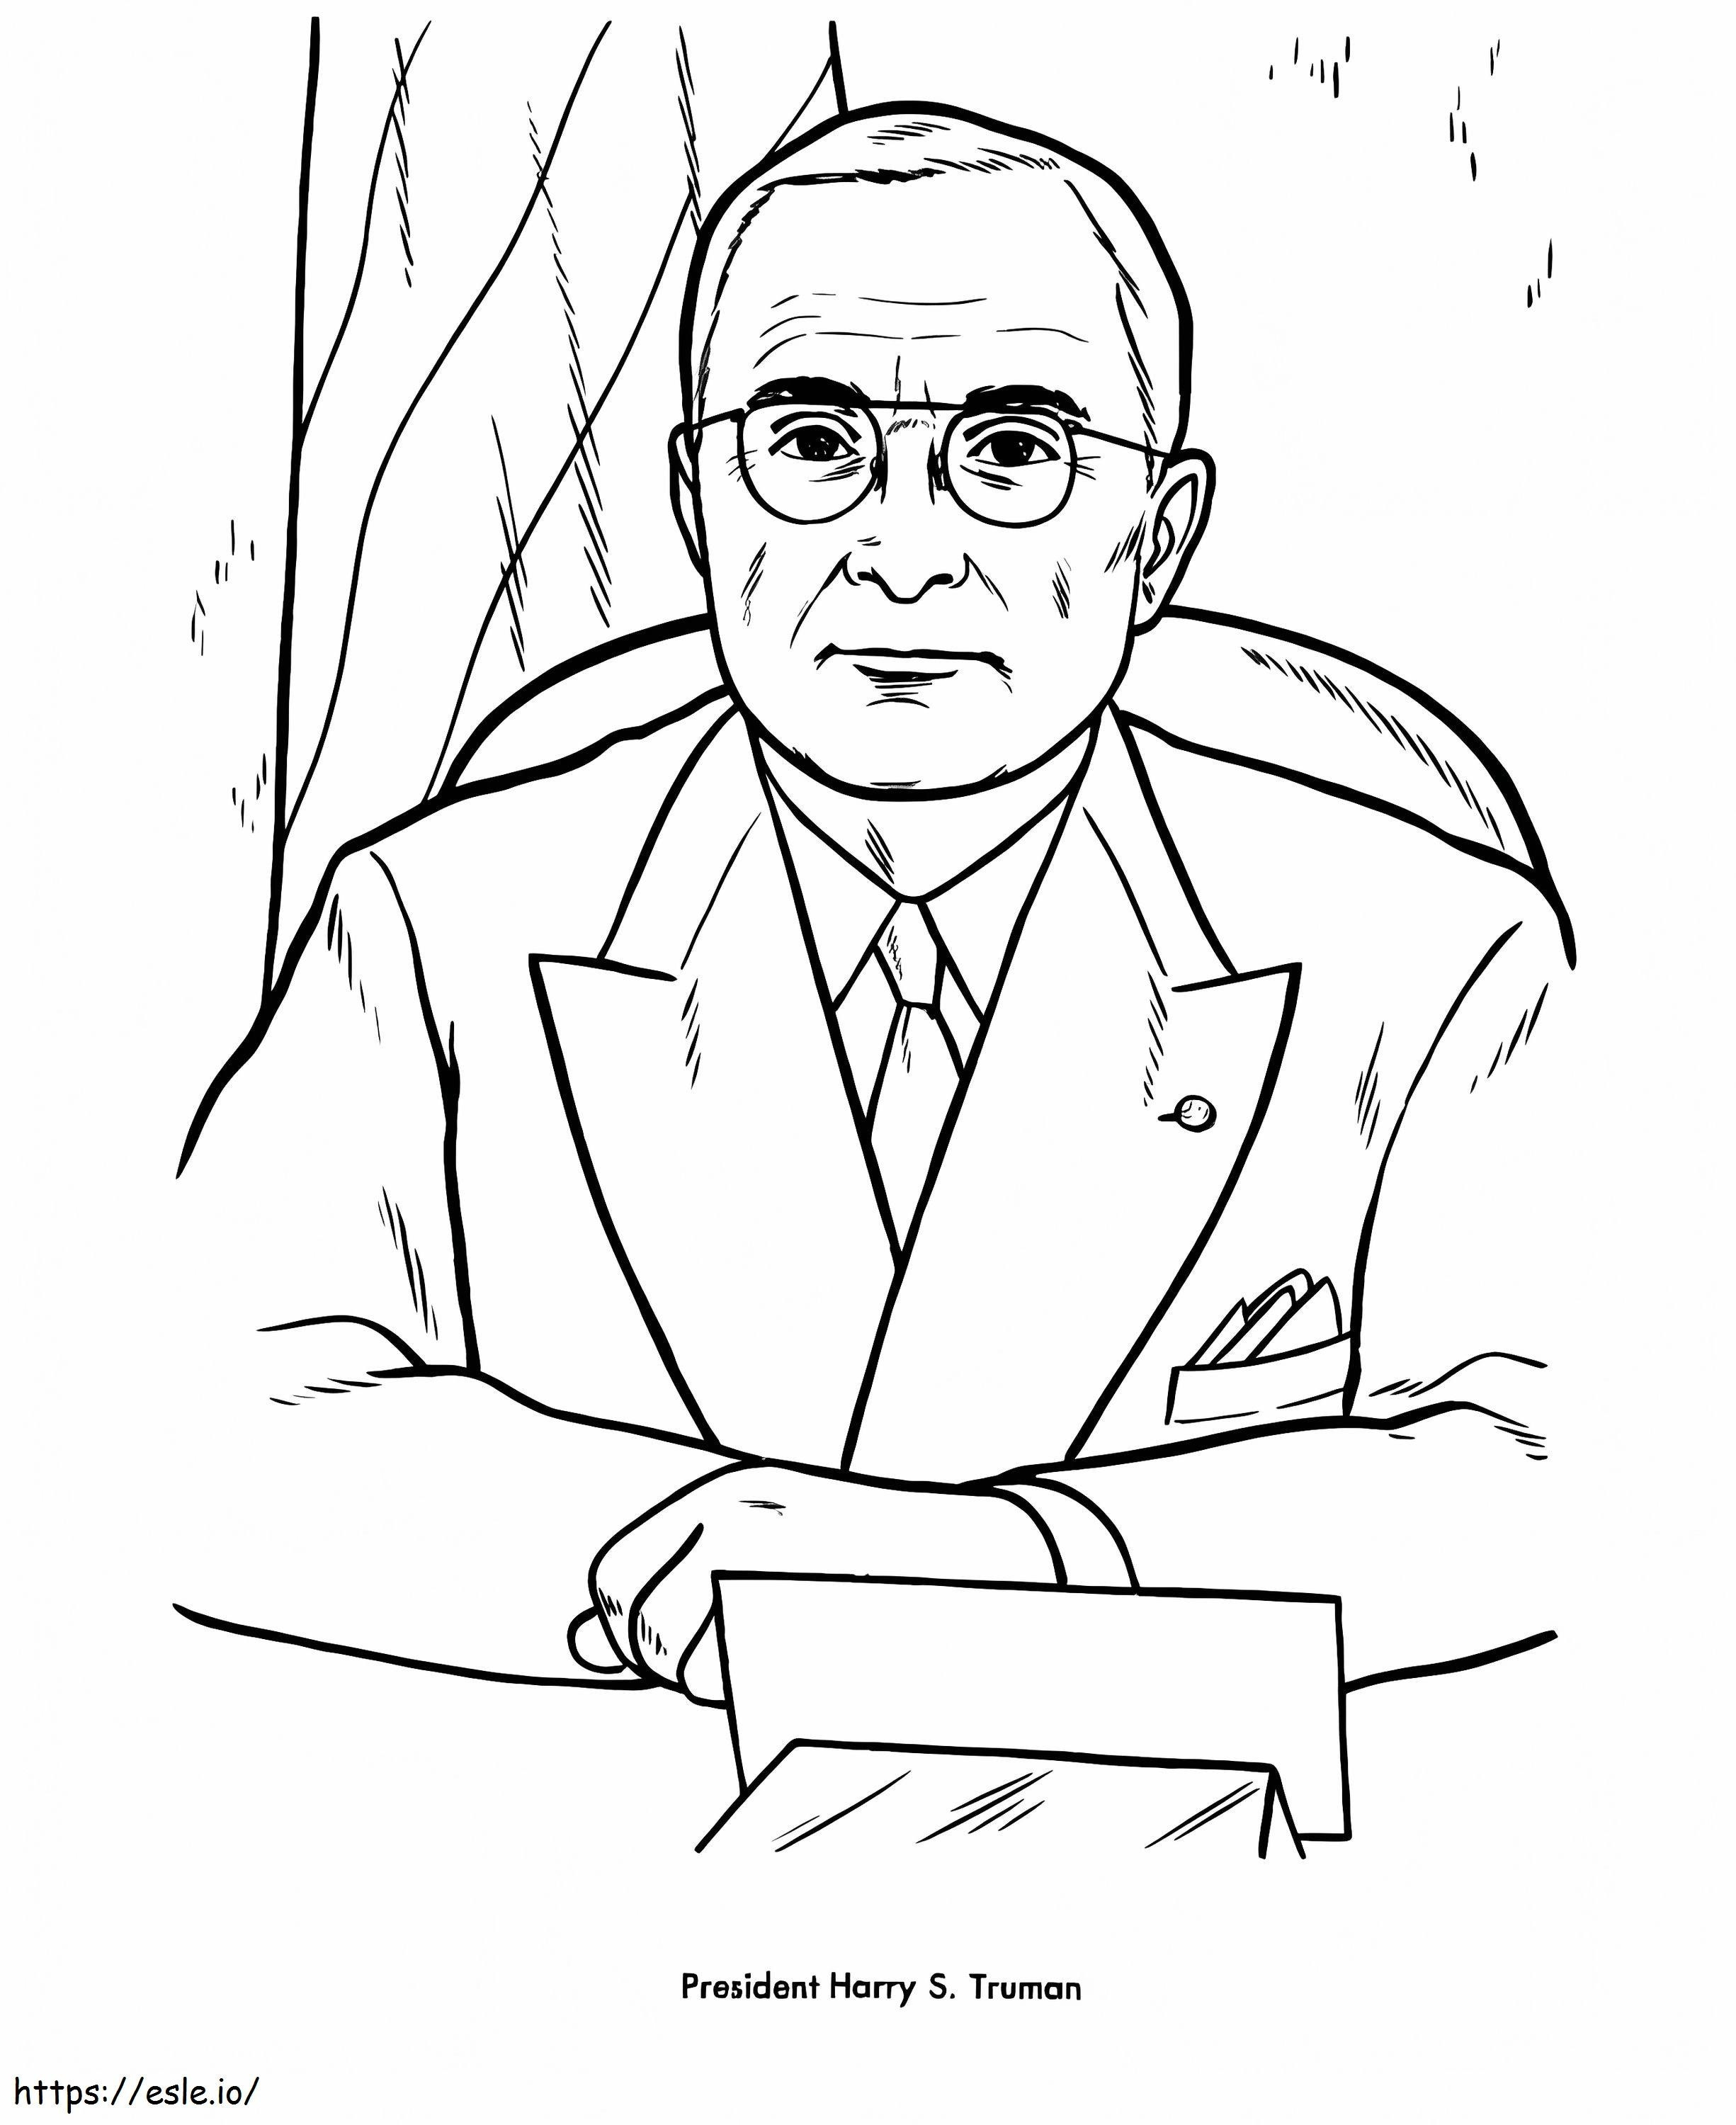 Presidente Harry S. Truman para colorir